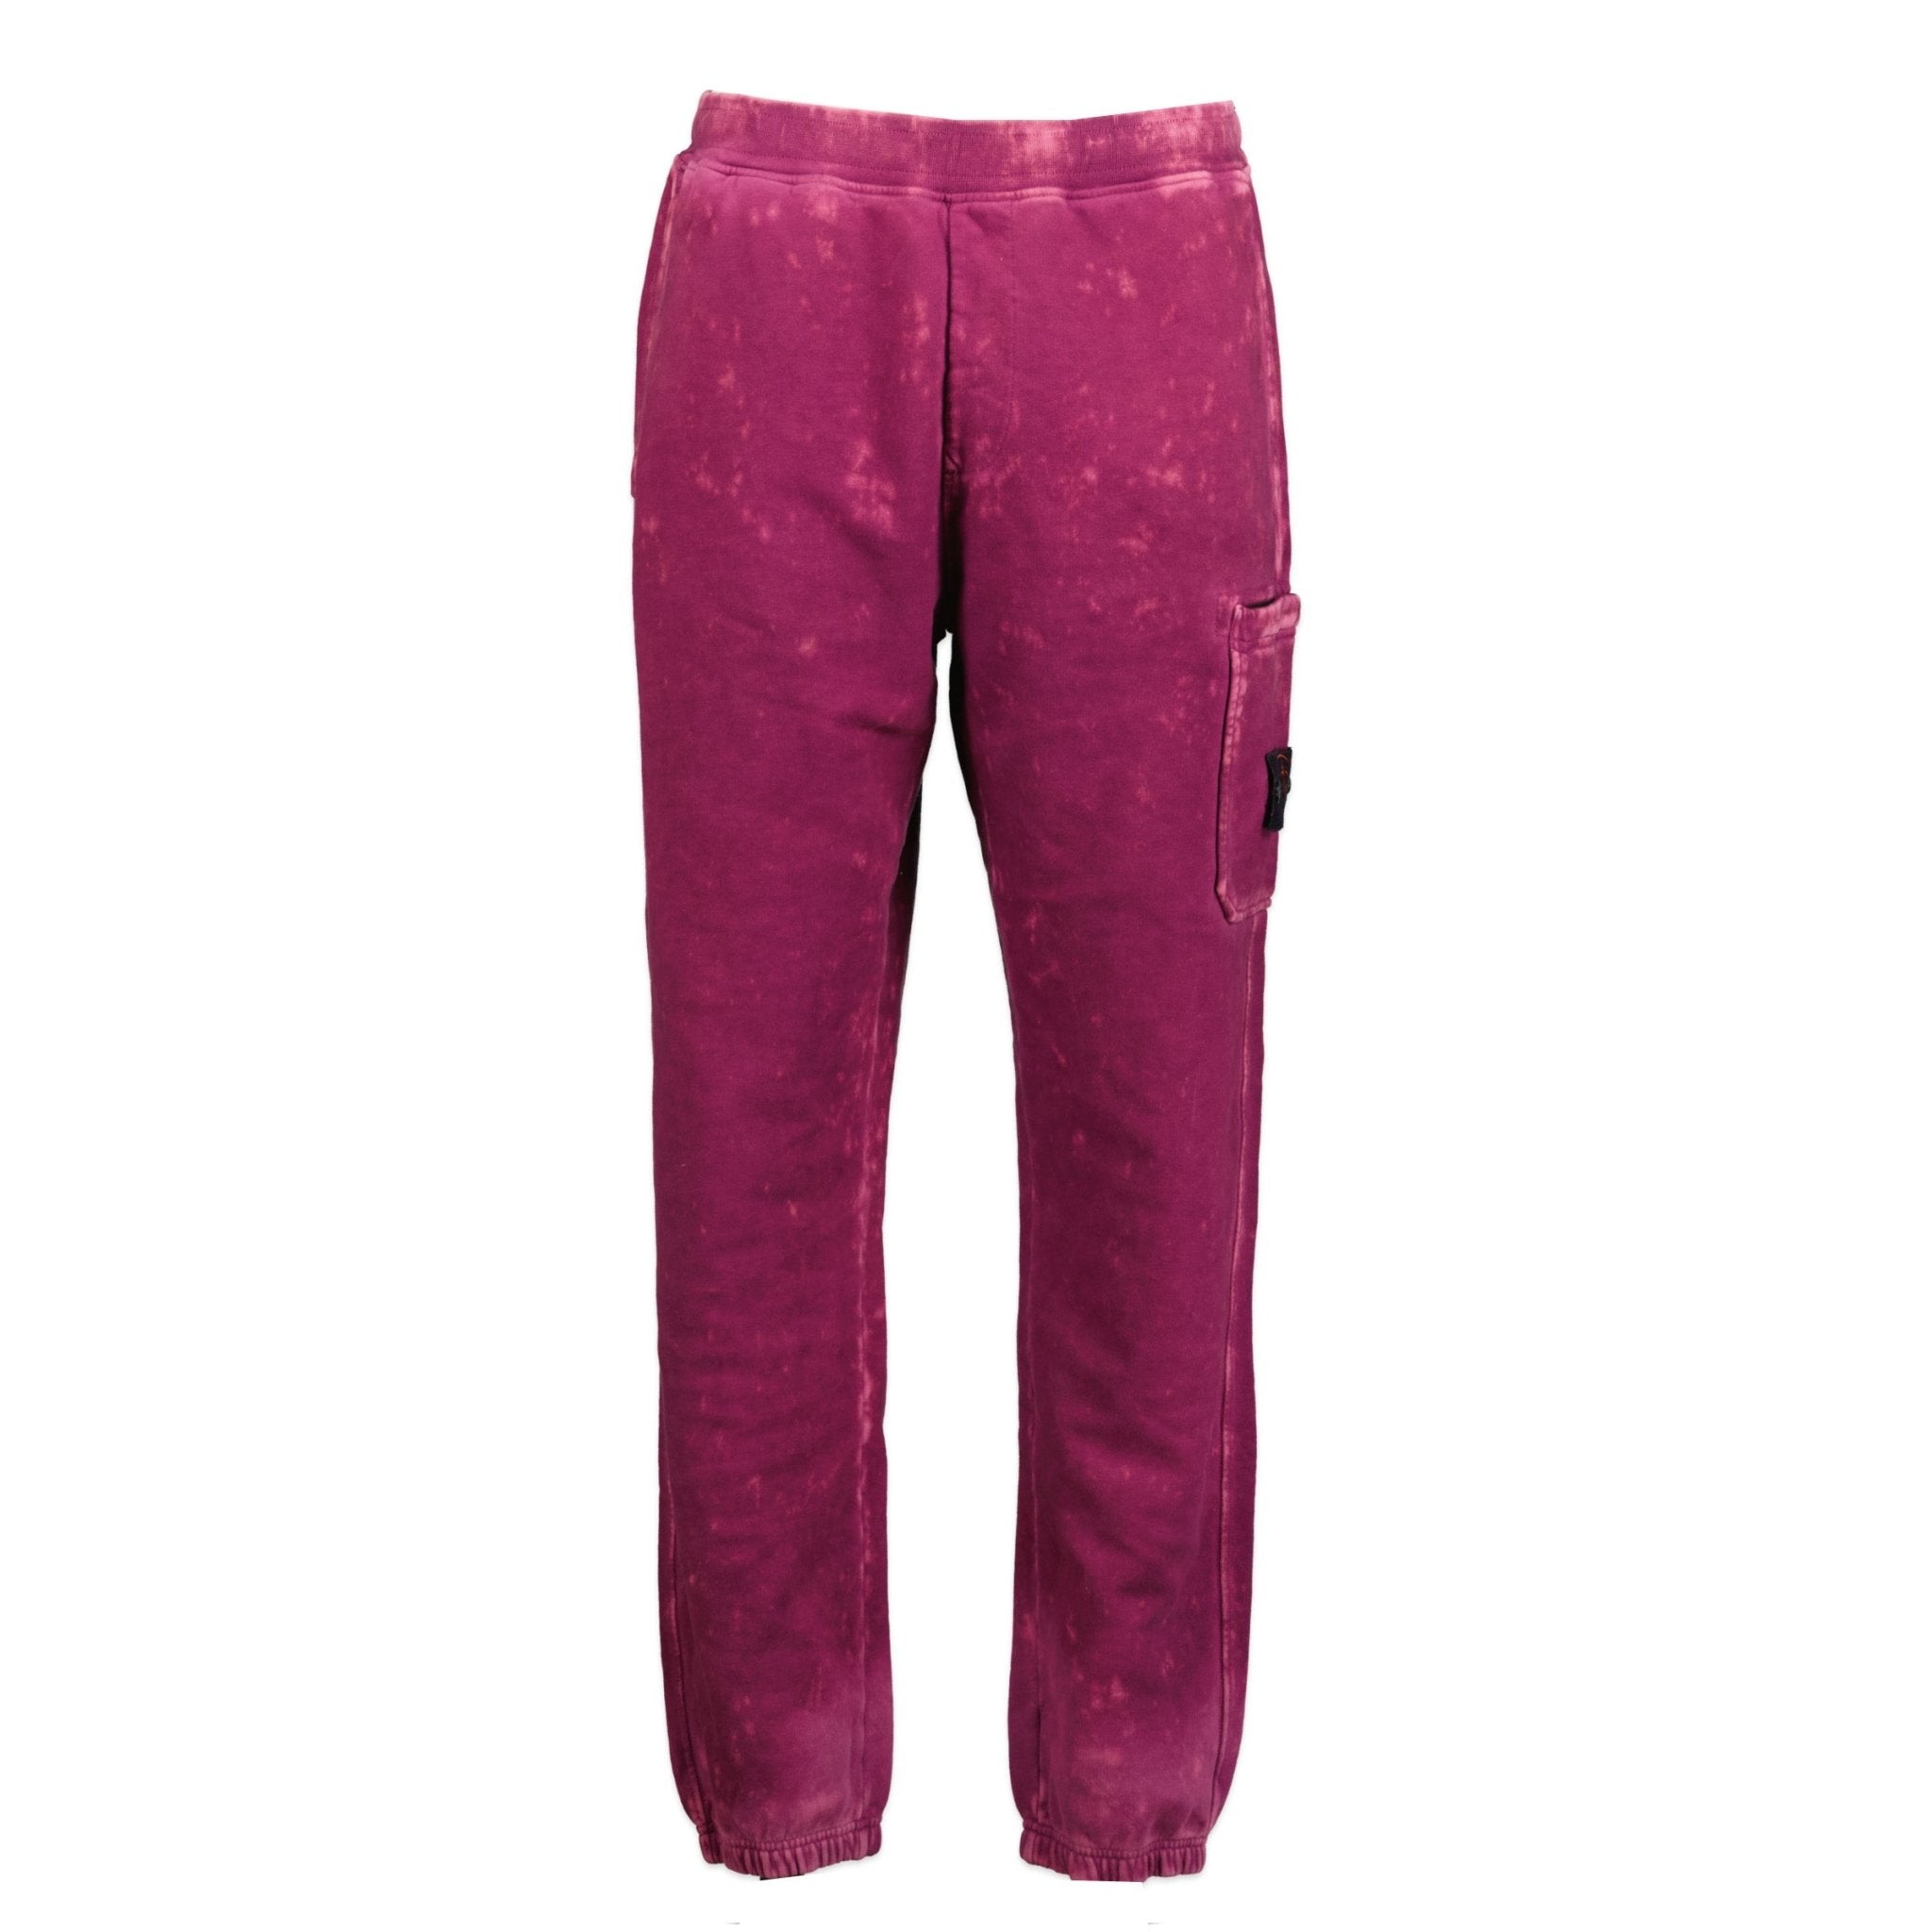 Pink sweatpants size small - Gem